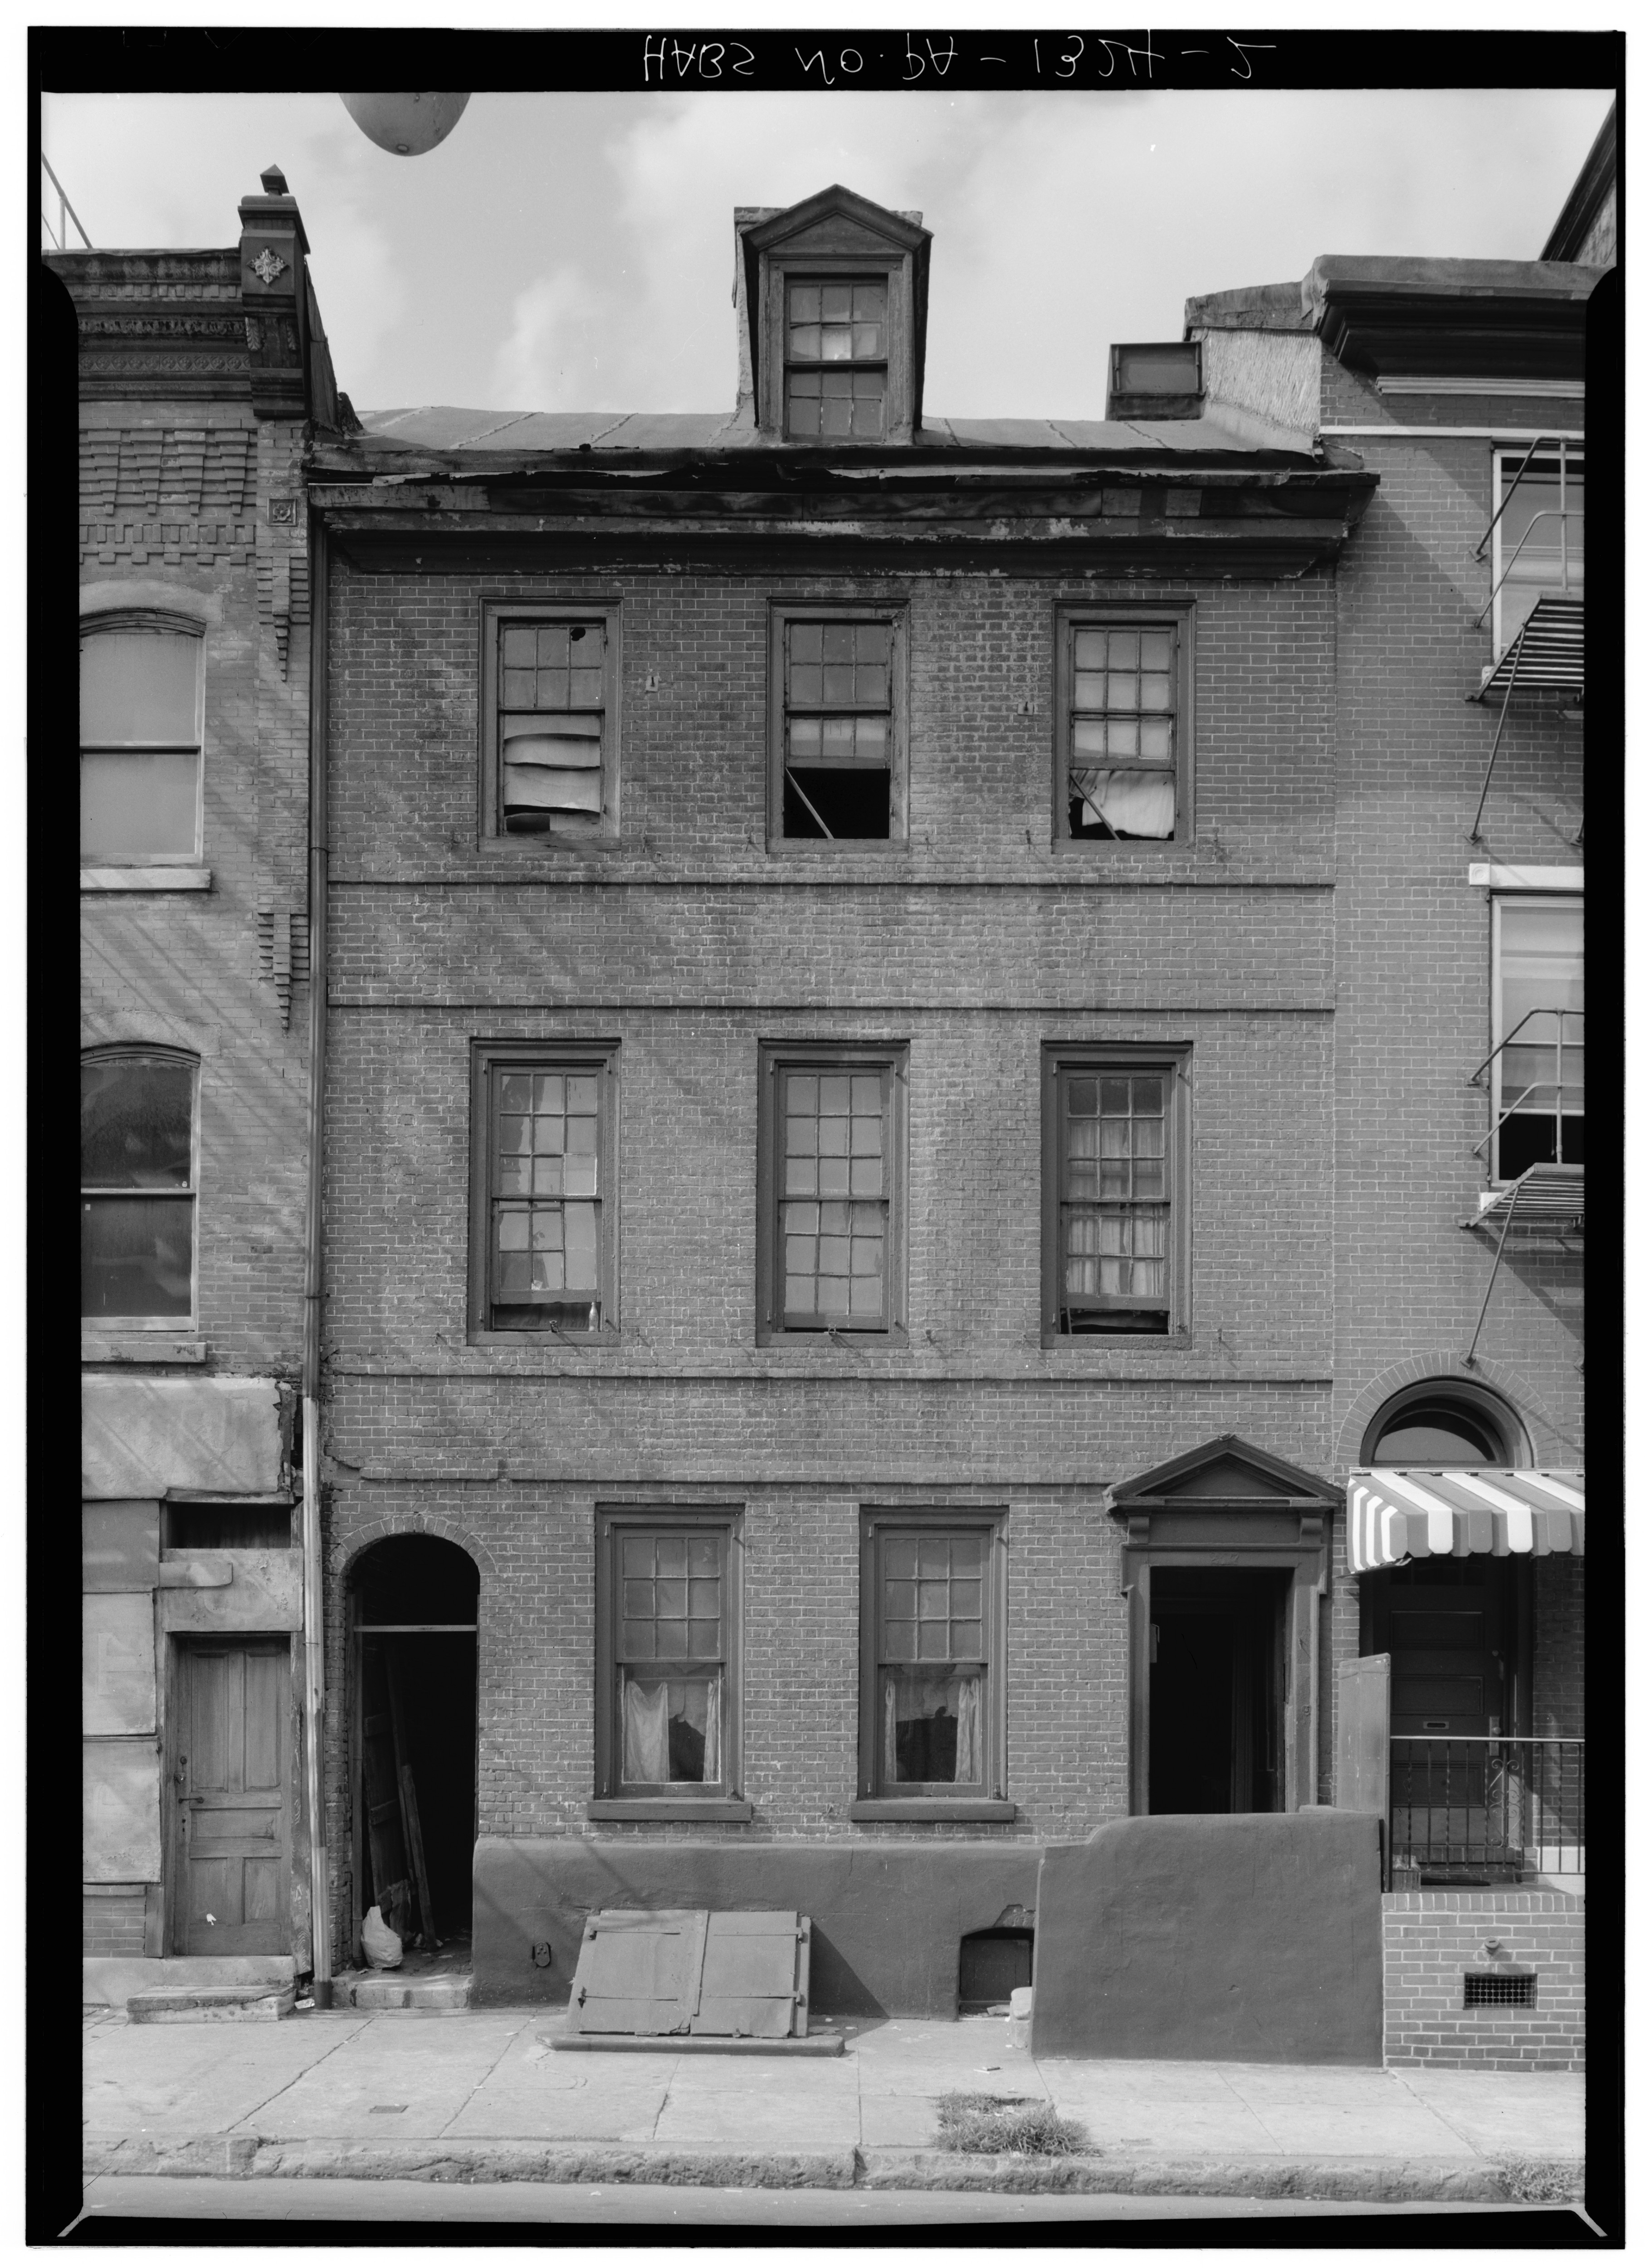 217 Spruce Street (1959 - Robinson - HABS)